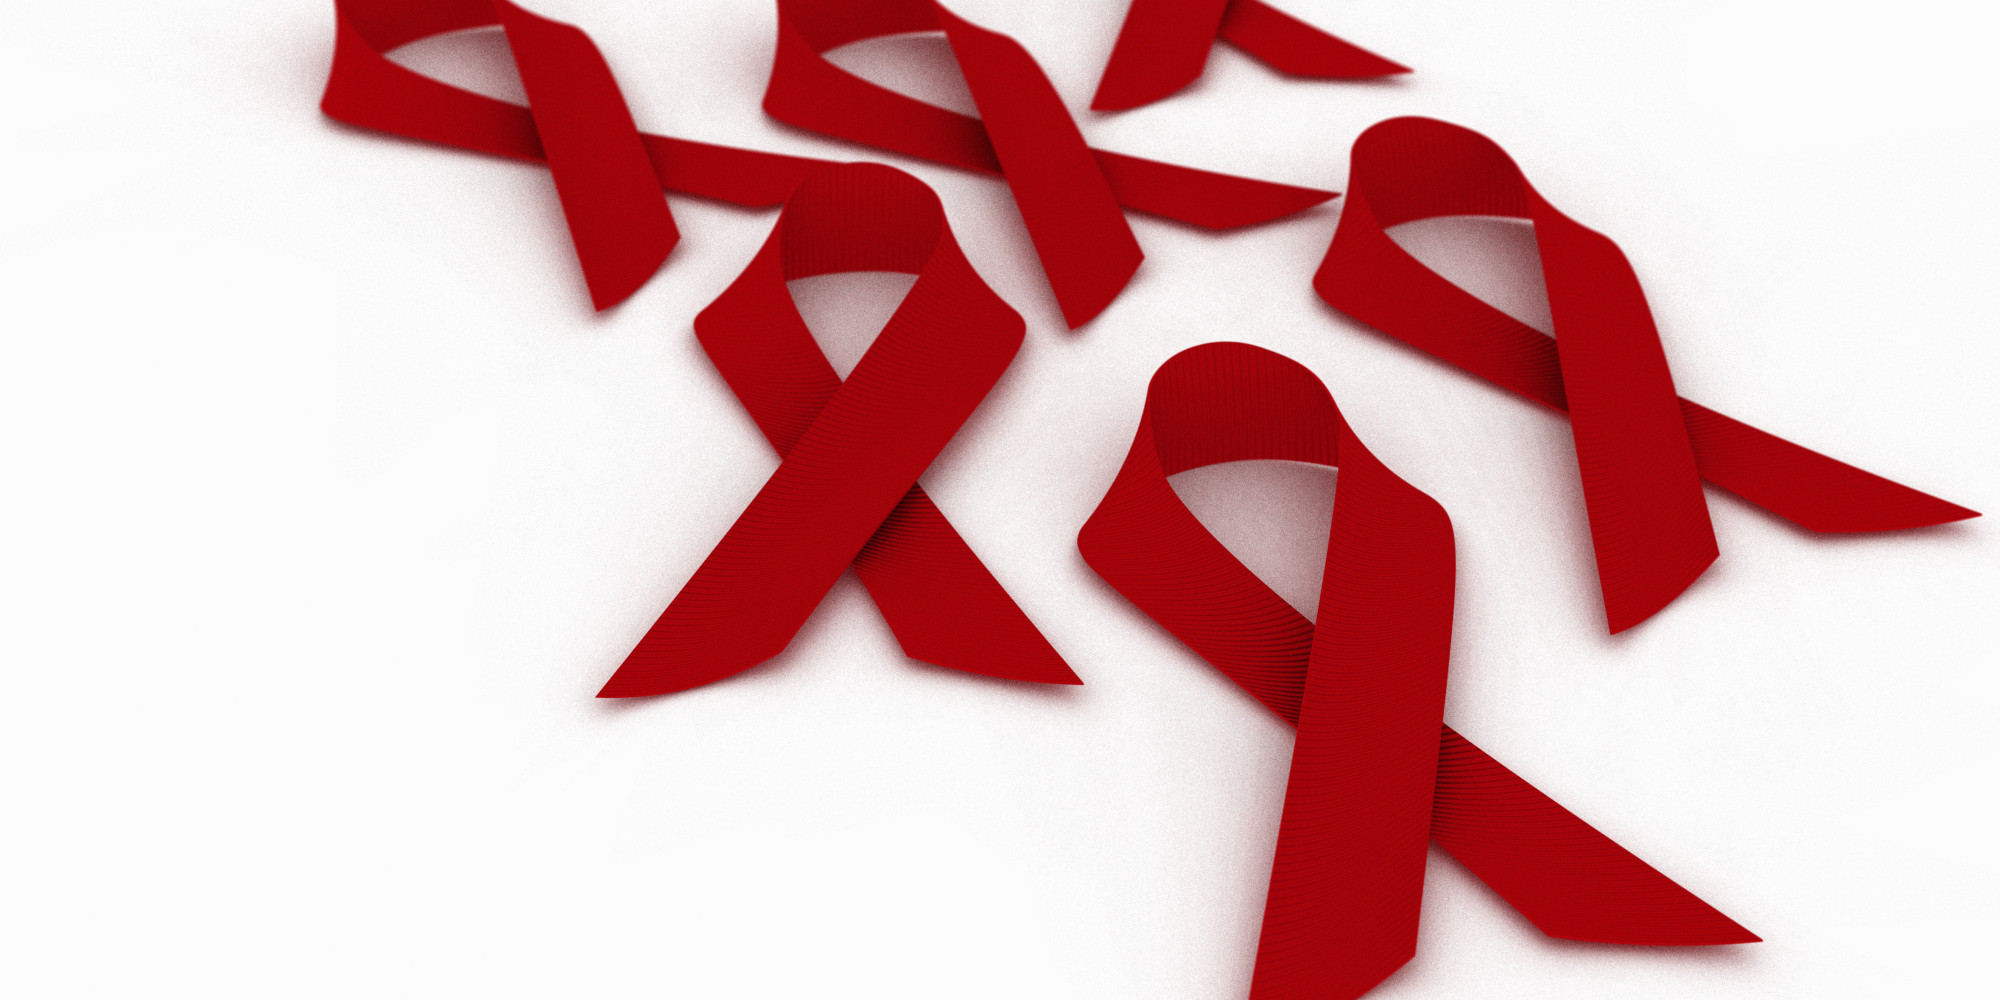 Этажи спид. Ленточка СПИД. Красная ленточка символ борьбы со СПИДОМ. Символ борьбы с ВИЧ. ВИЧ без фона.